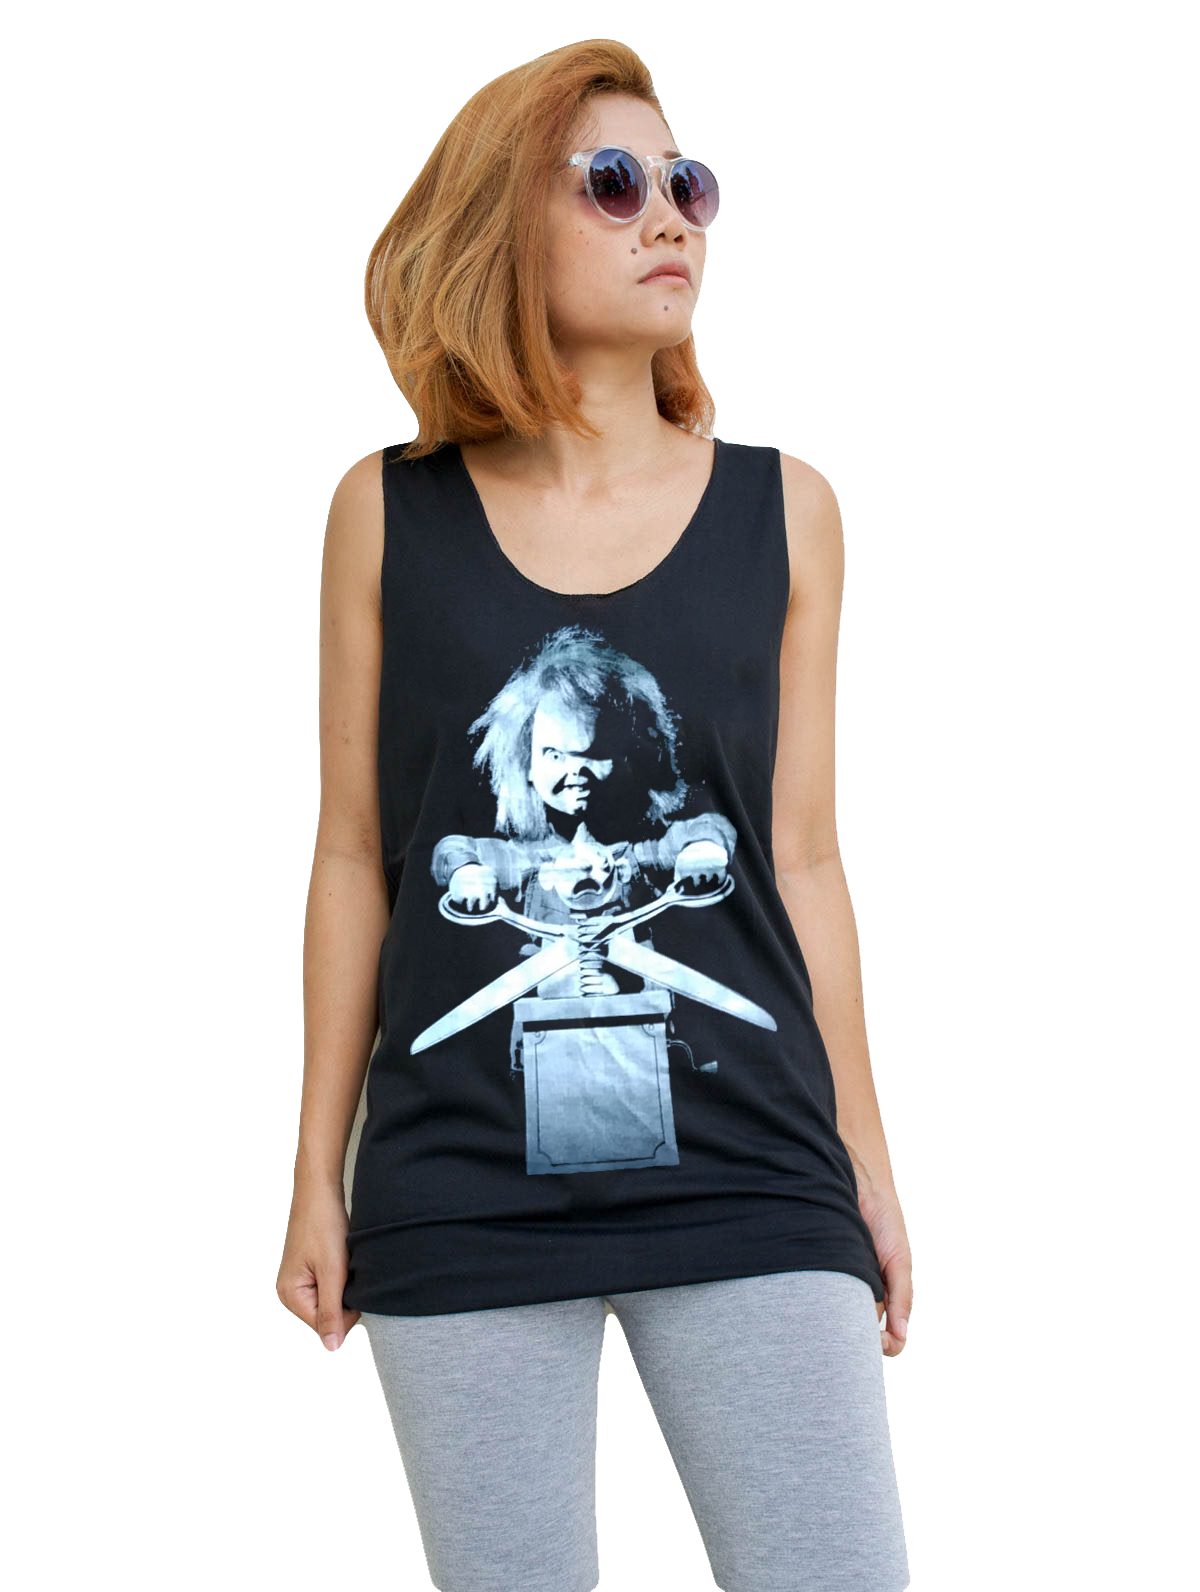 Unisex Chucky Childs Play Tank-Top Singlet vest Sleeveless T-shirt